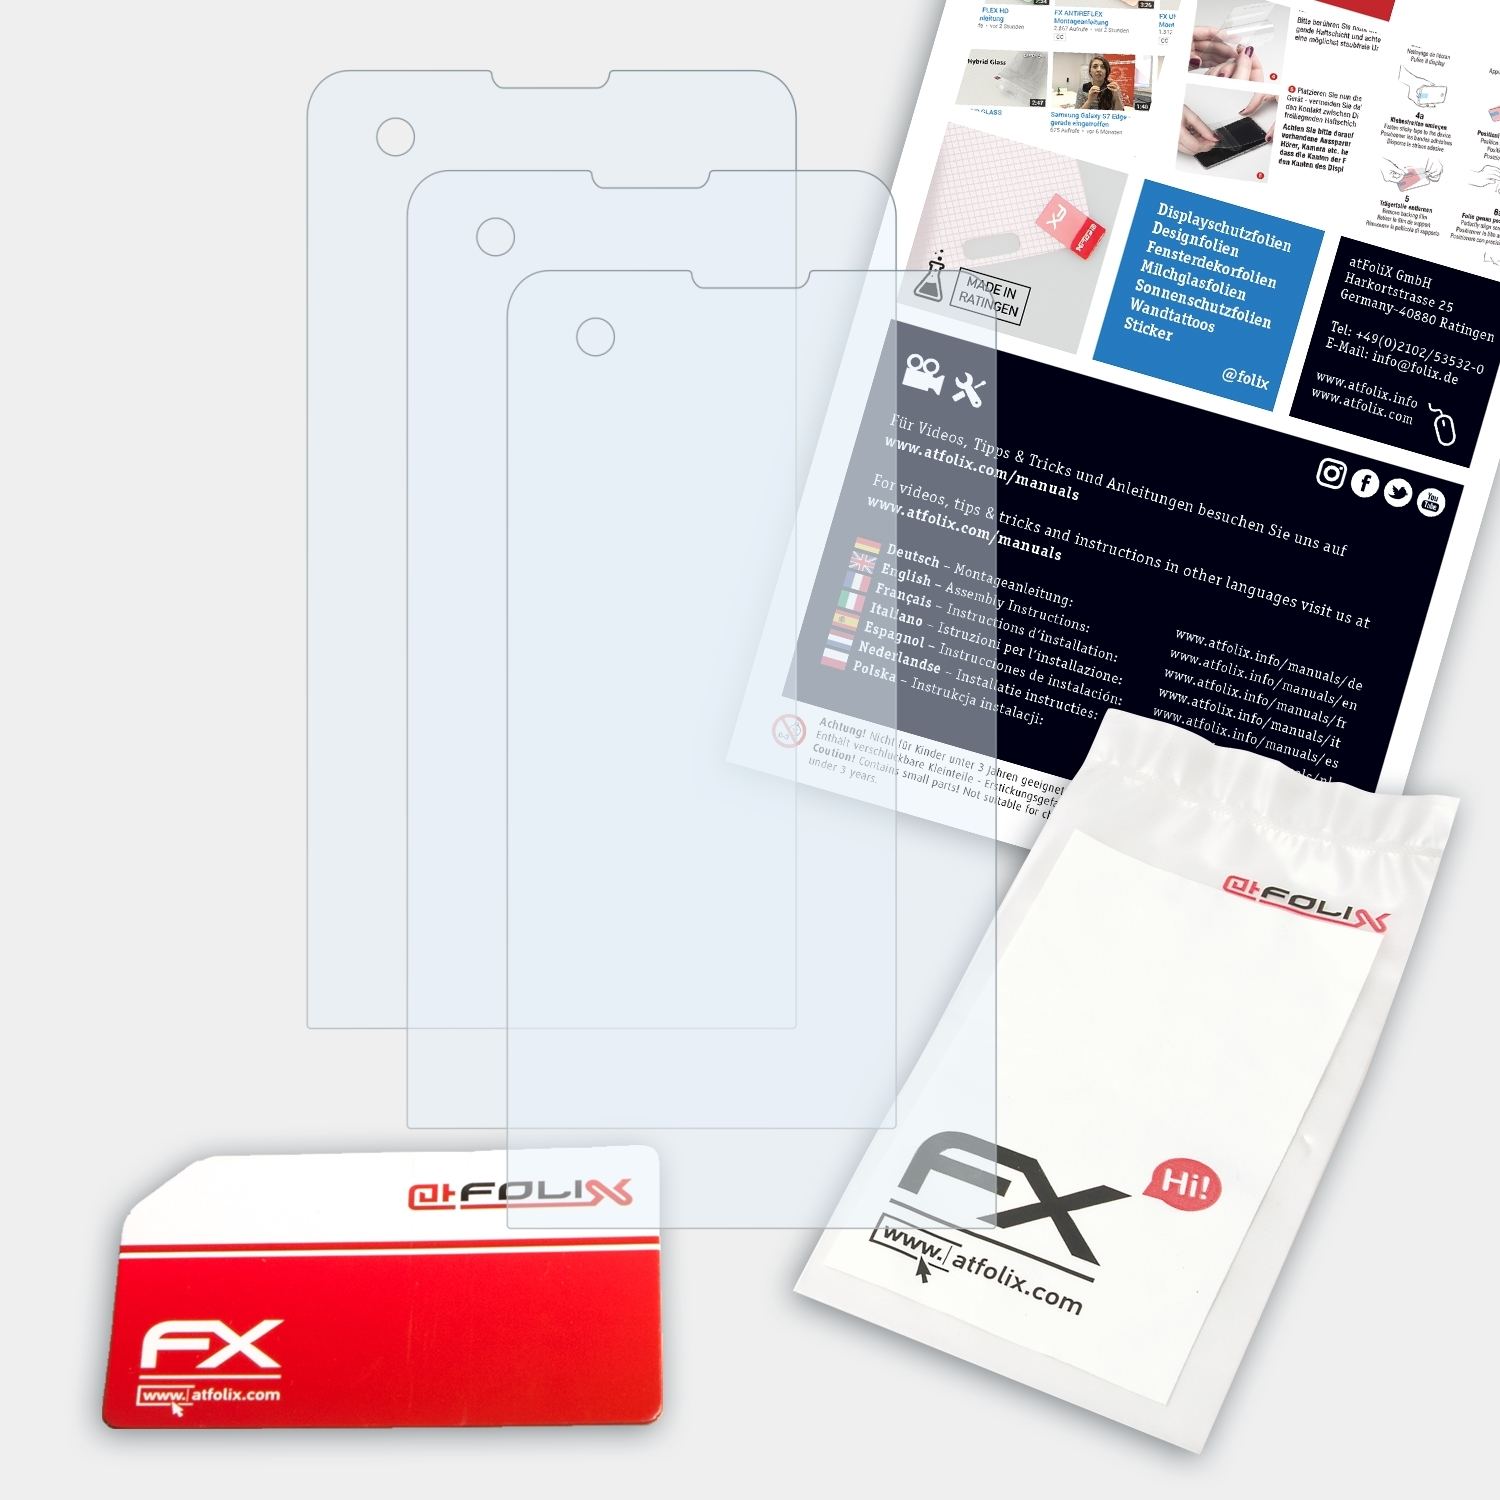 Displayschutz(für Sony FX-Clear SX) Xperia ATFOLIX 3x